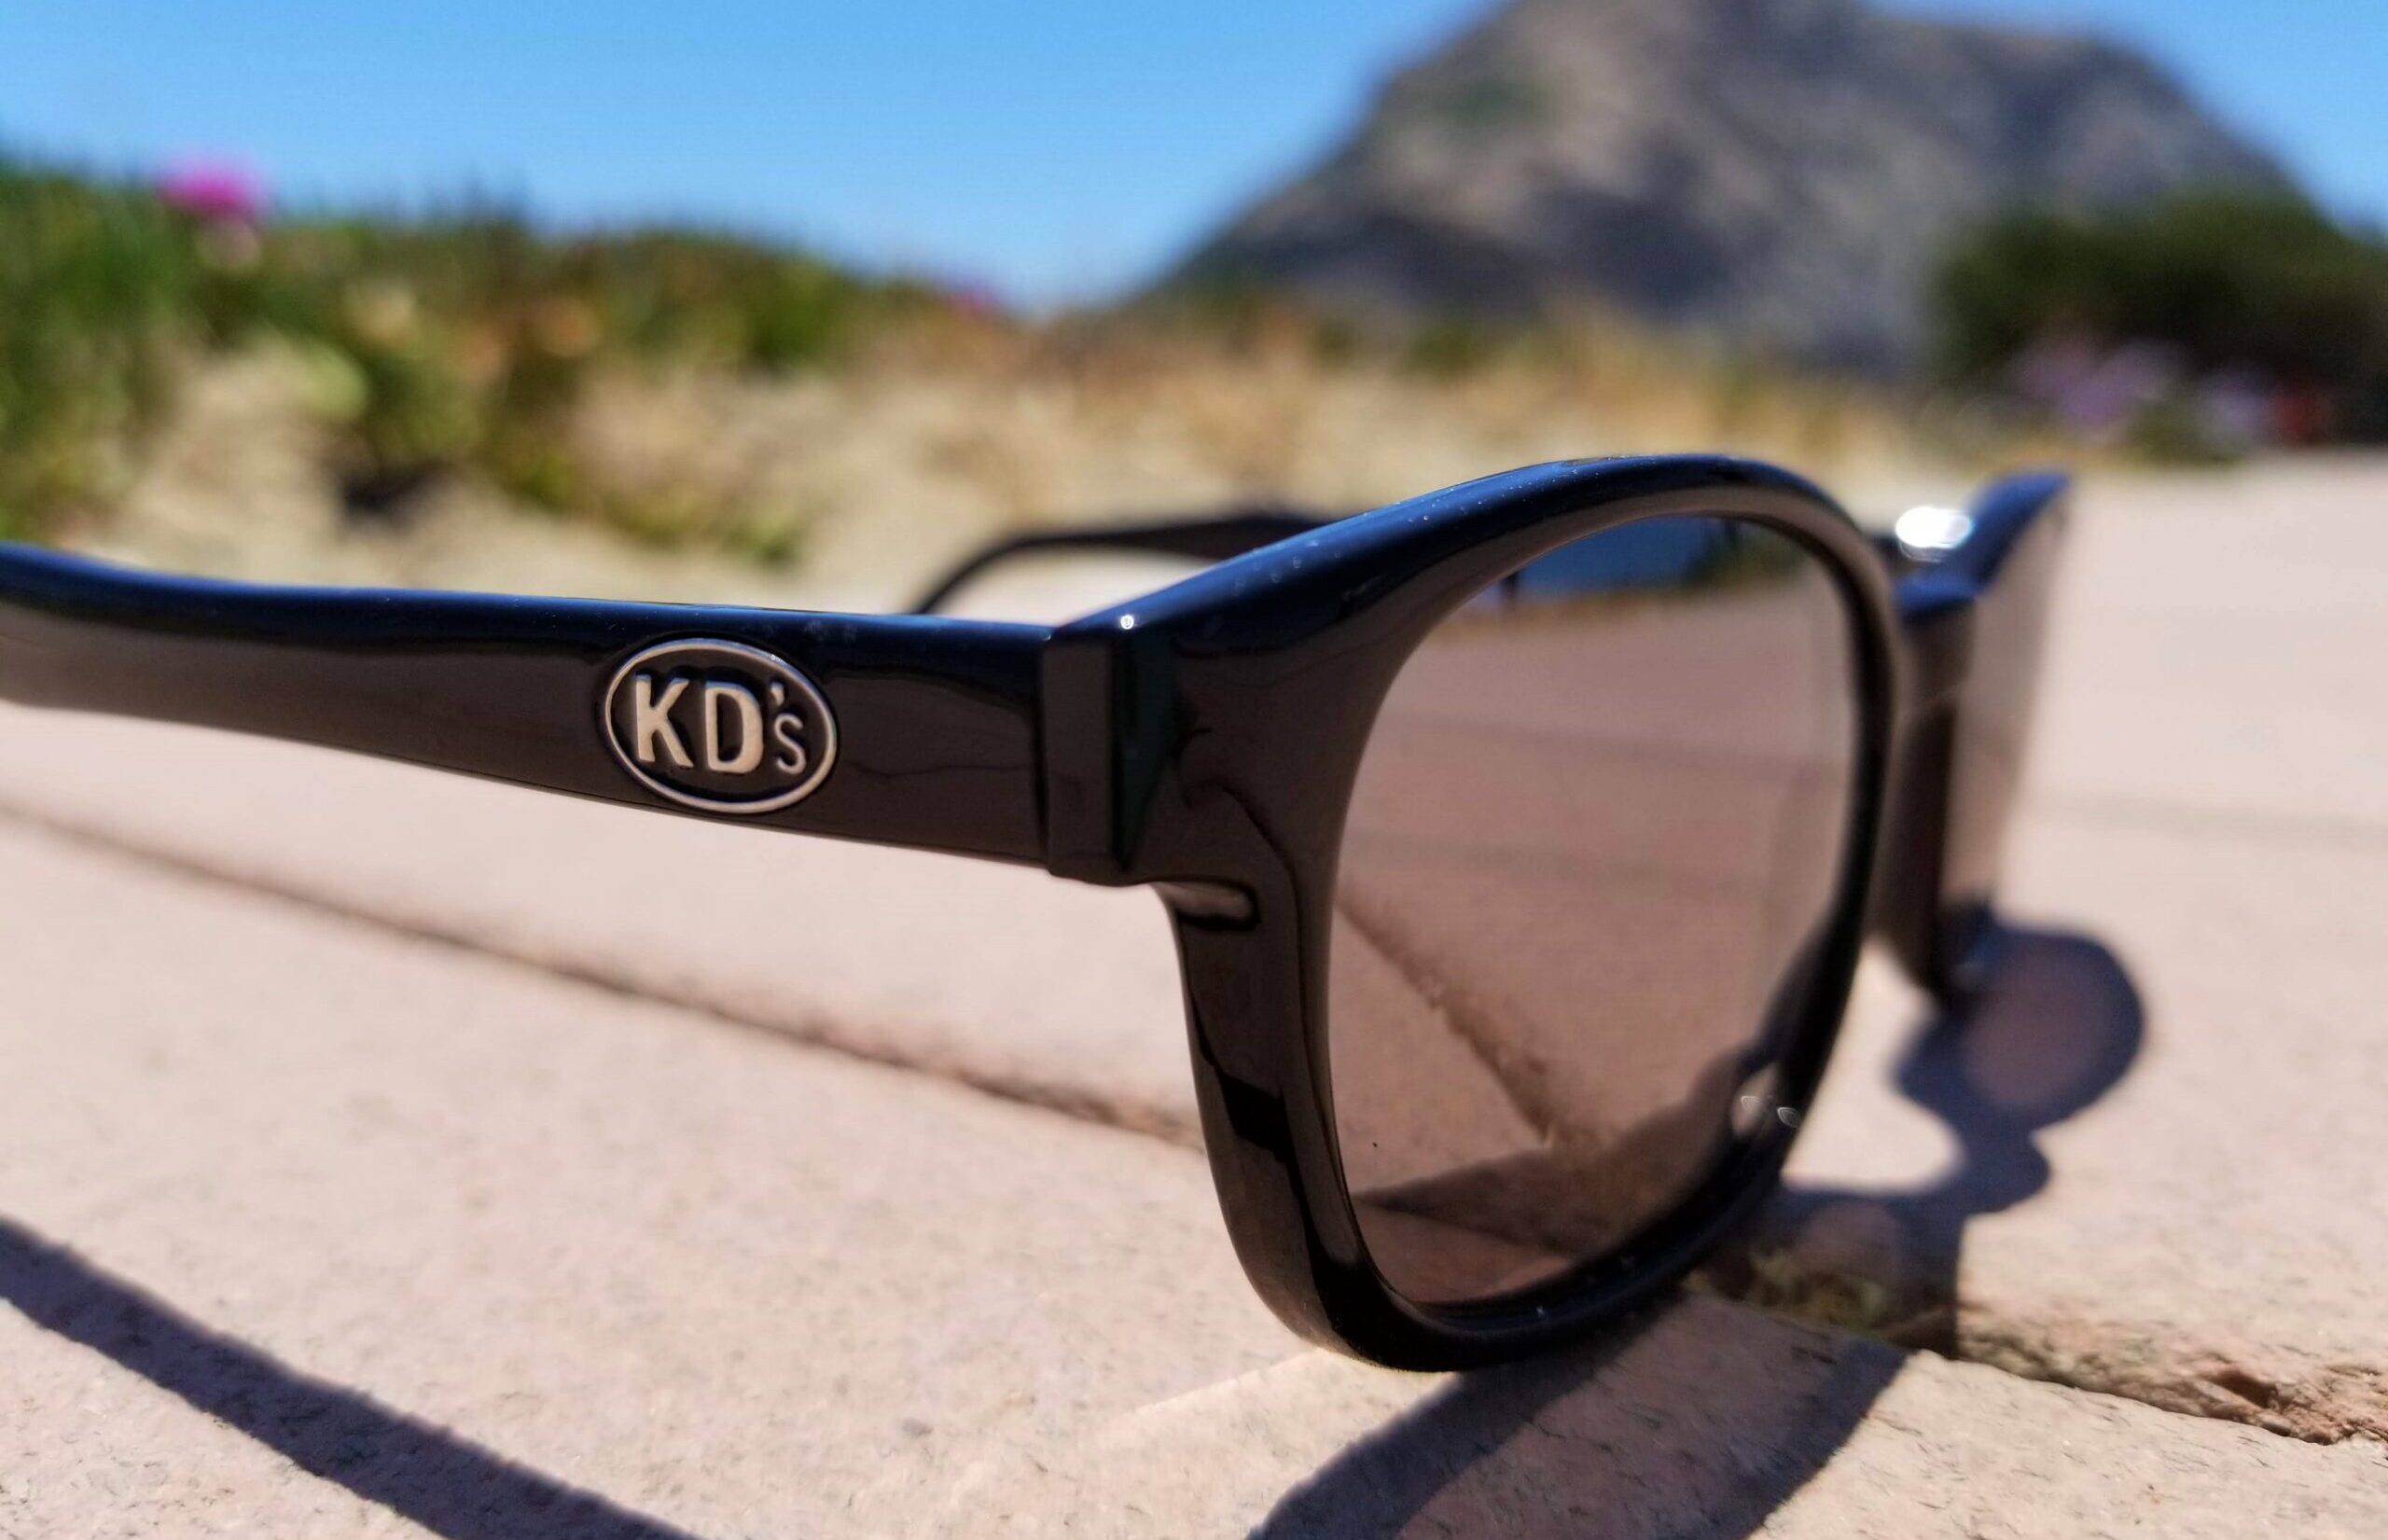 Motorcycle Sunglasses from Coast Sunglasses | Original KD's